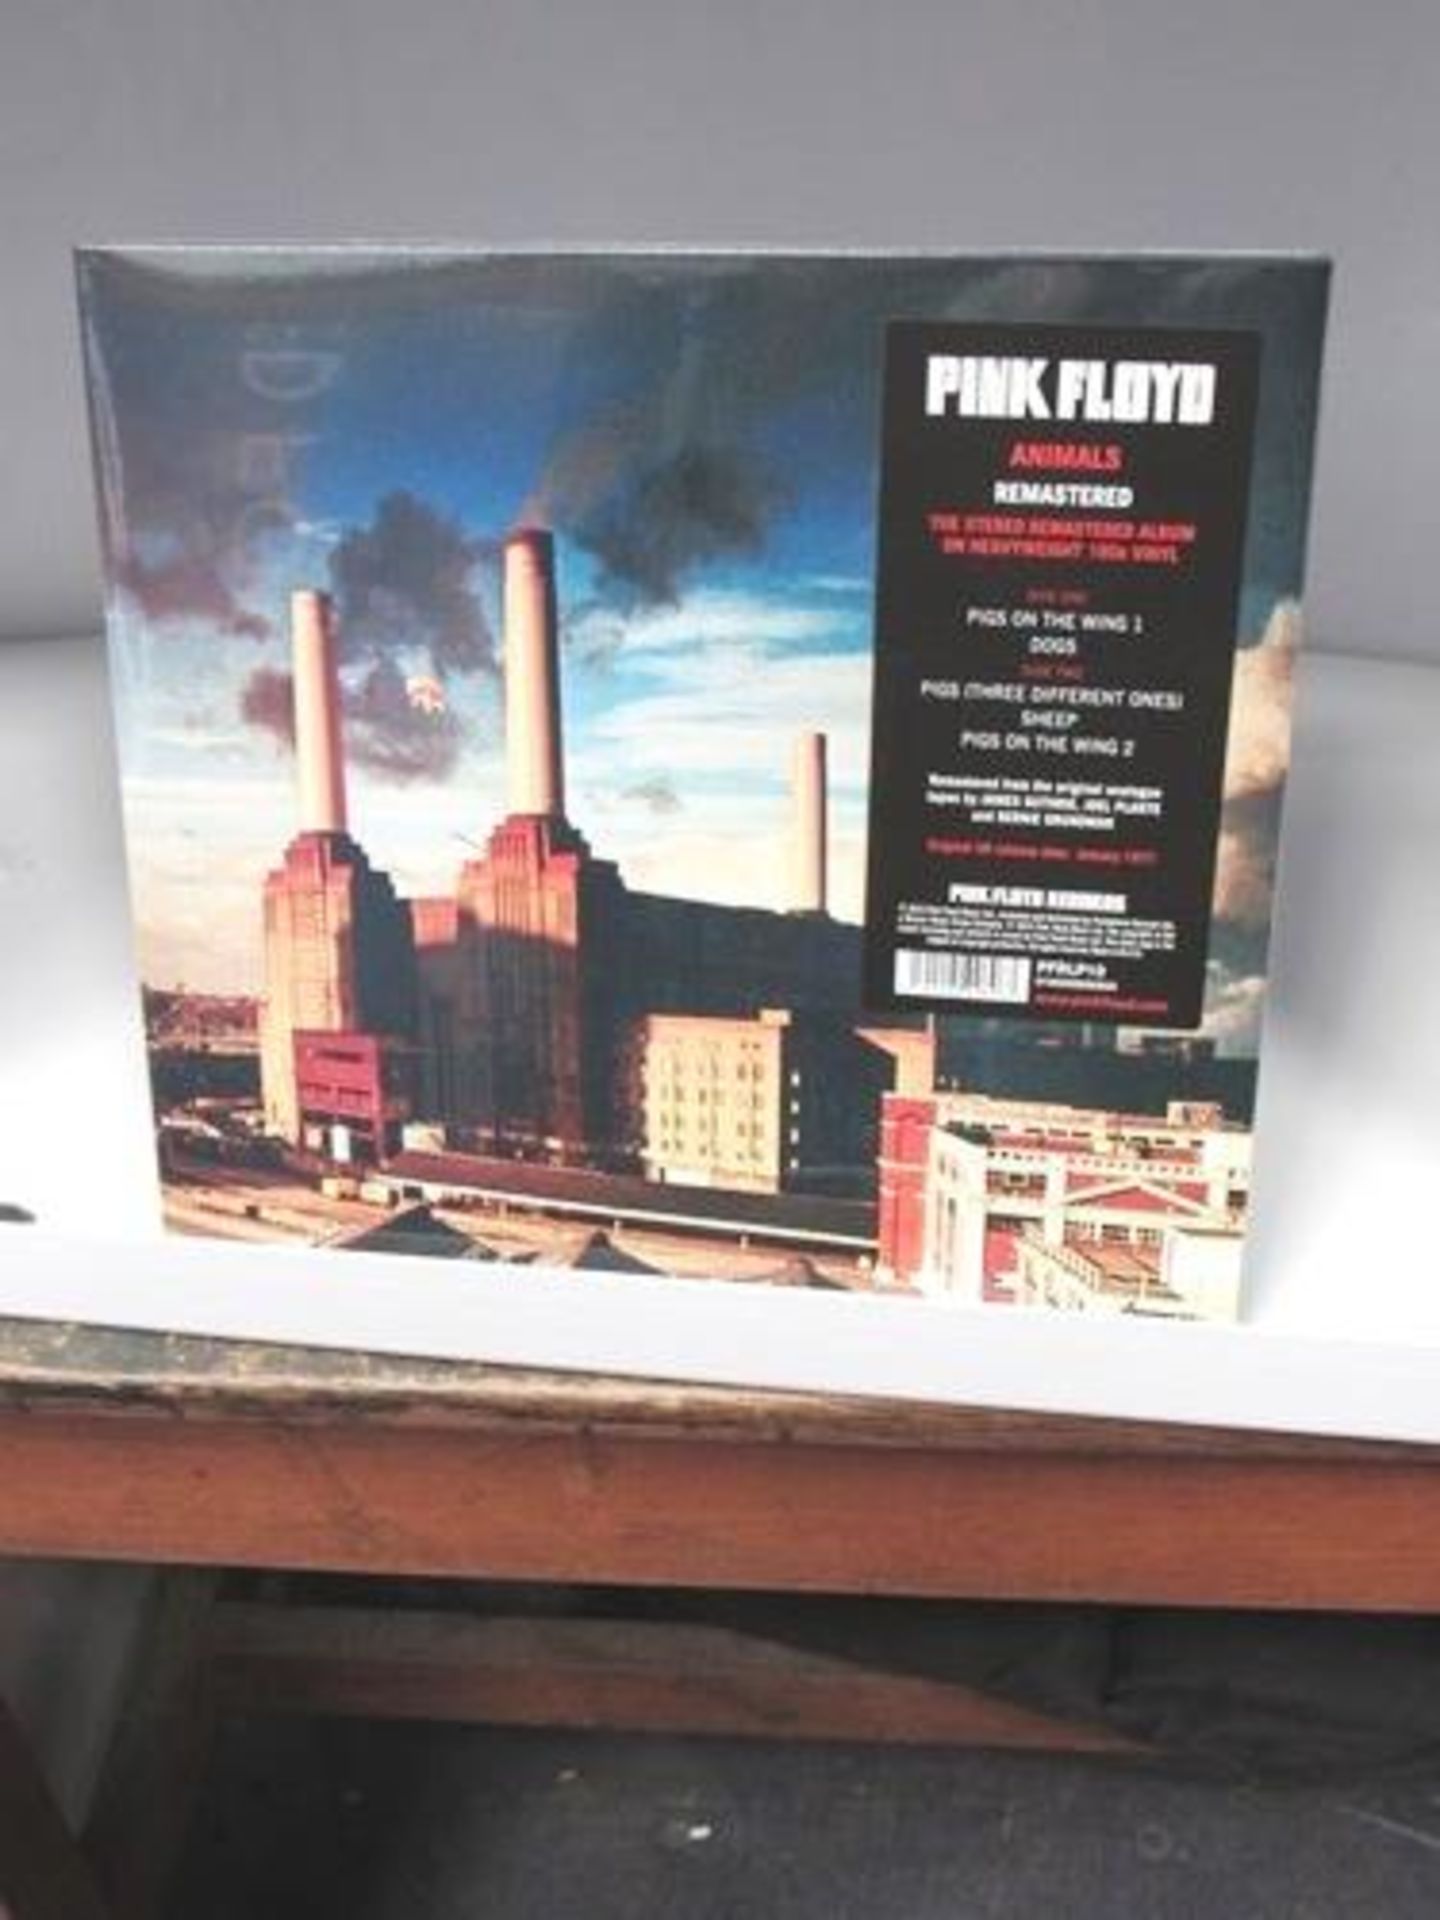 8 x Pink Floyd Animals Remastered vinyl's - New (vinyl shelf)